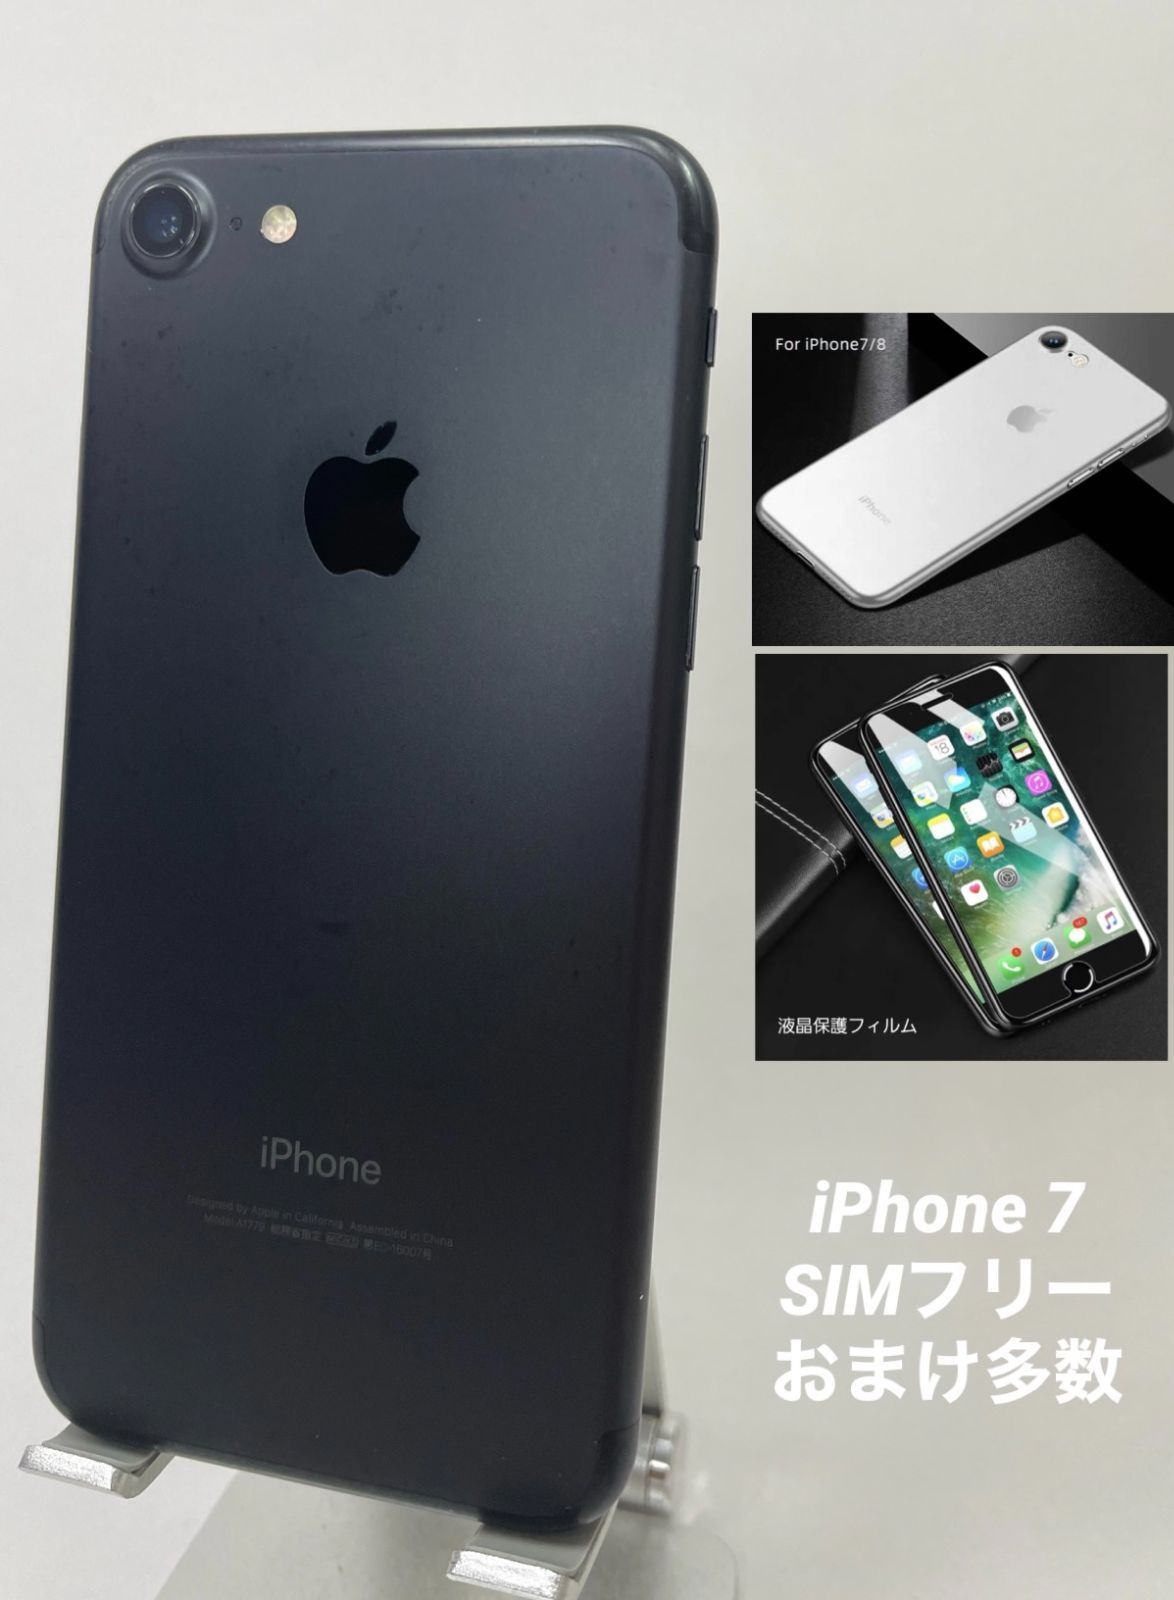 iPhone7 128GB ブラック/ストア版シムフリー/大容量2300mAh 新品 